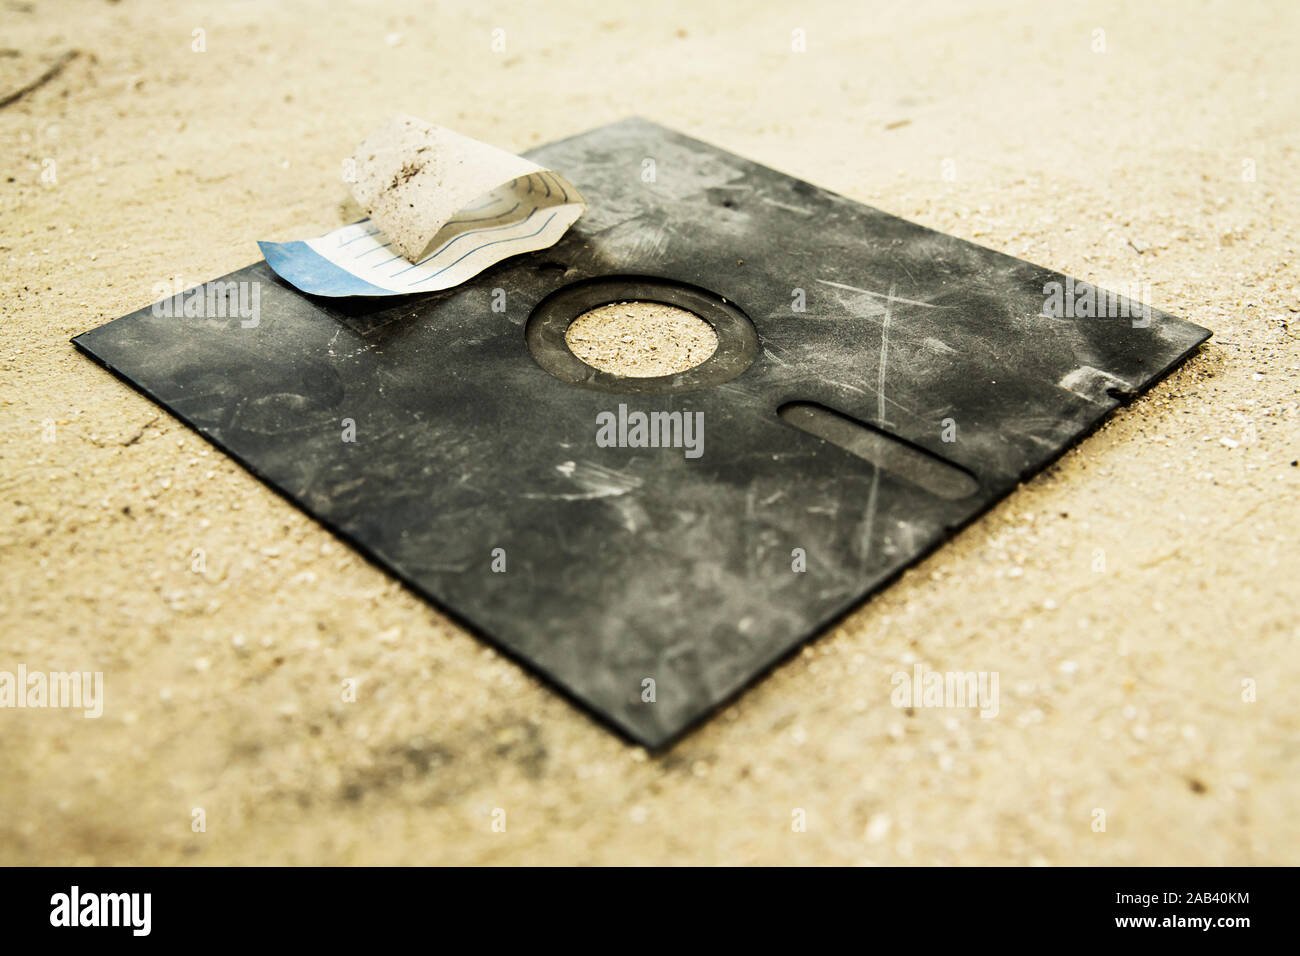 Ein alte 8 Zoll Diskette liegt auf dem Fußboden |An old 8 inches floppy disk lying on the floor| Stock Photo